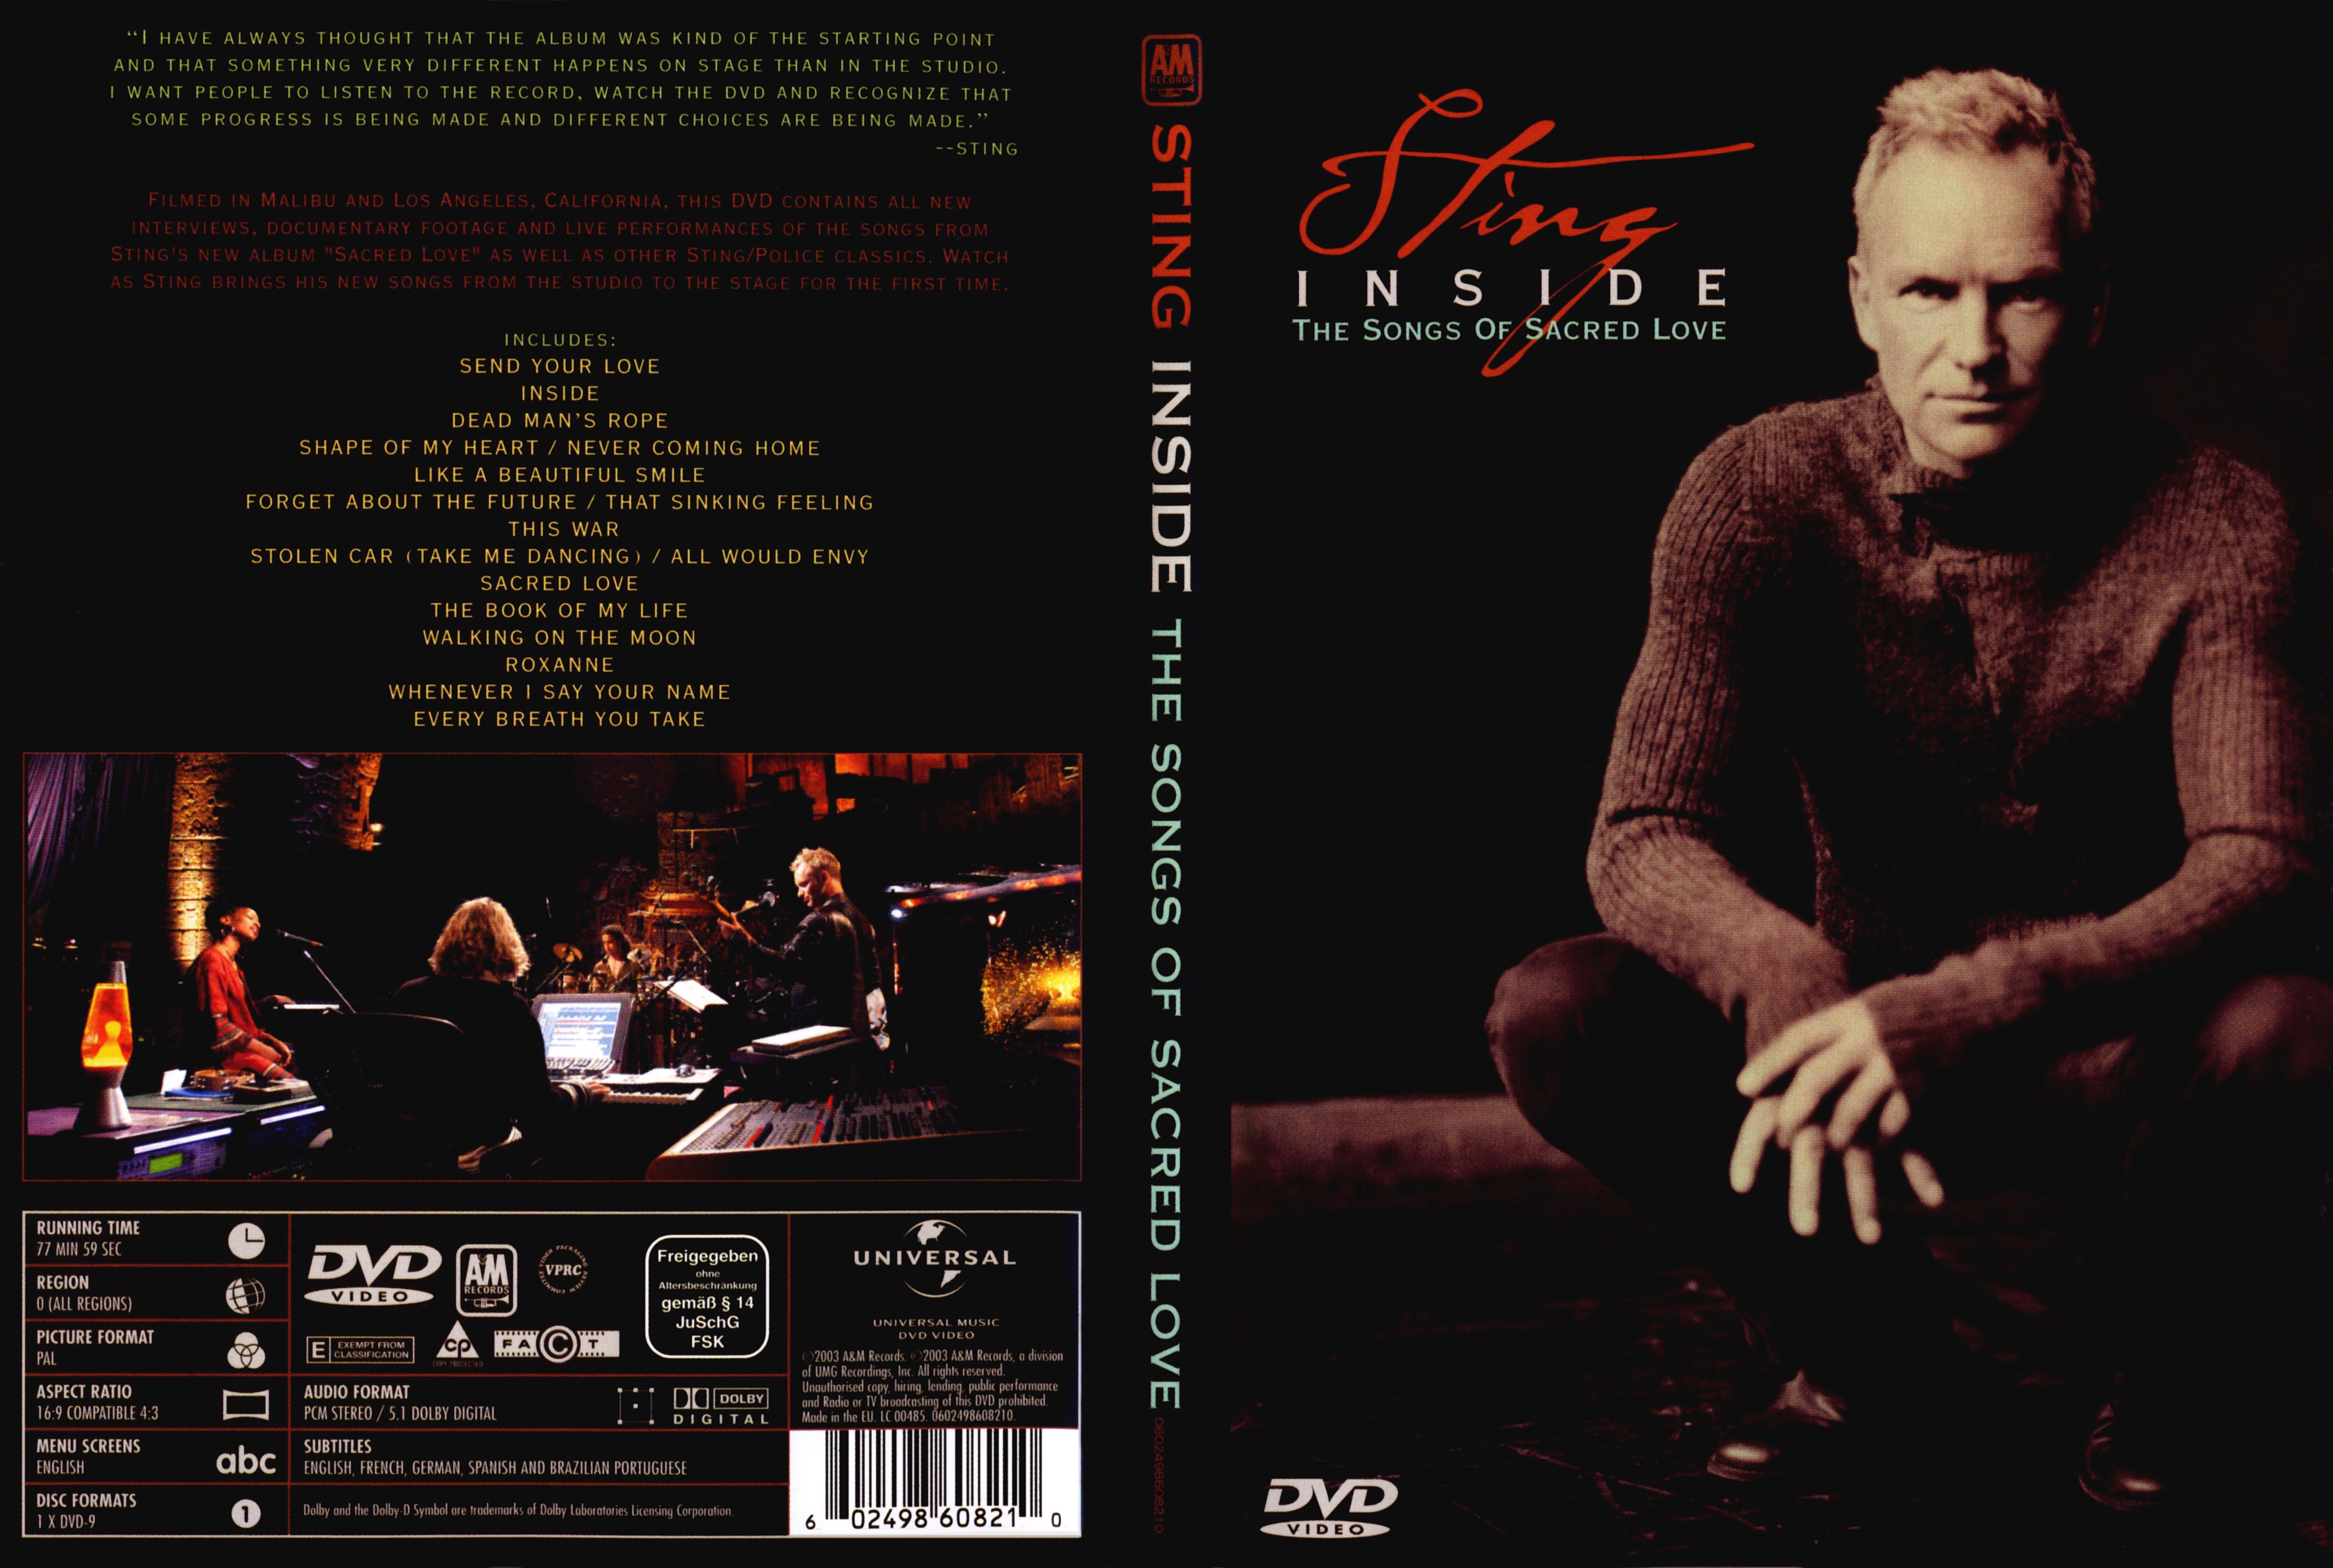 Jaquette DVD Sting - inside